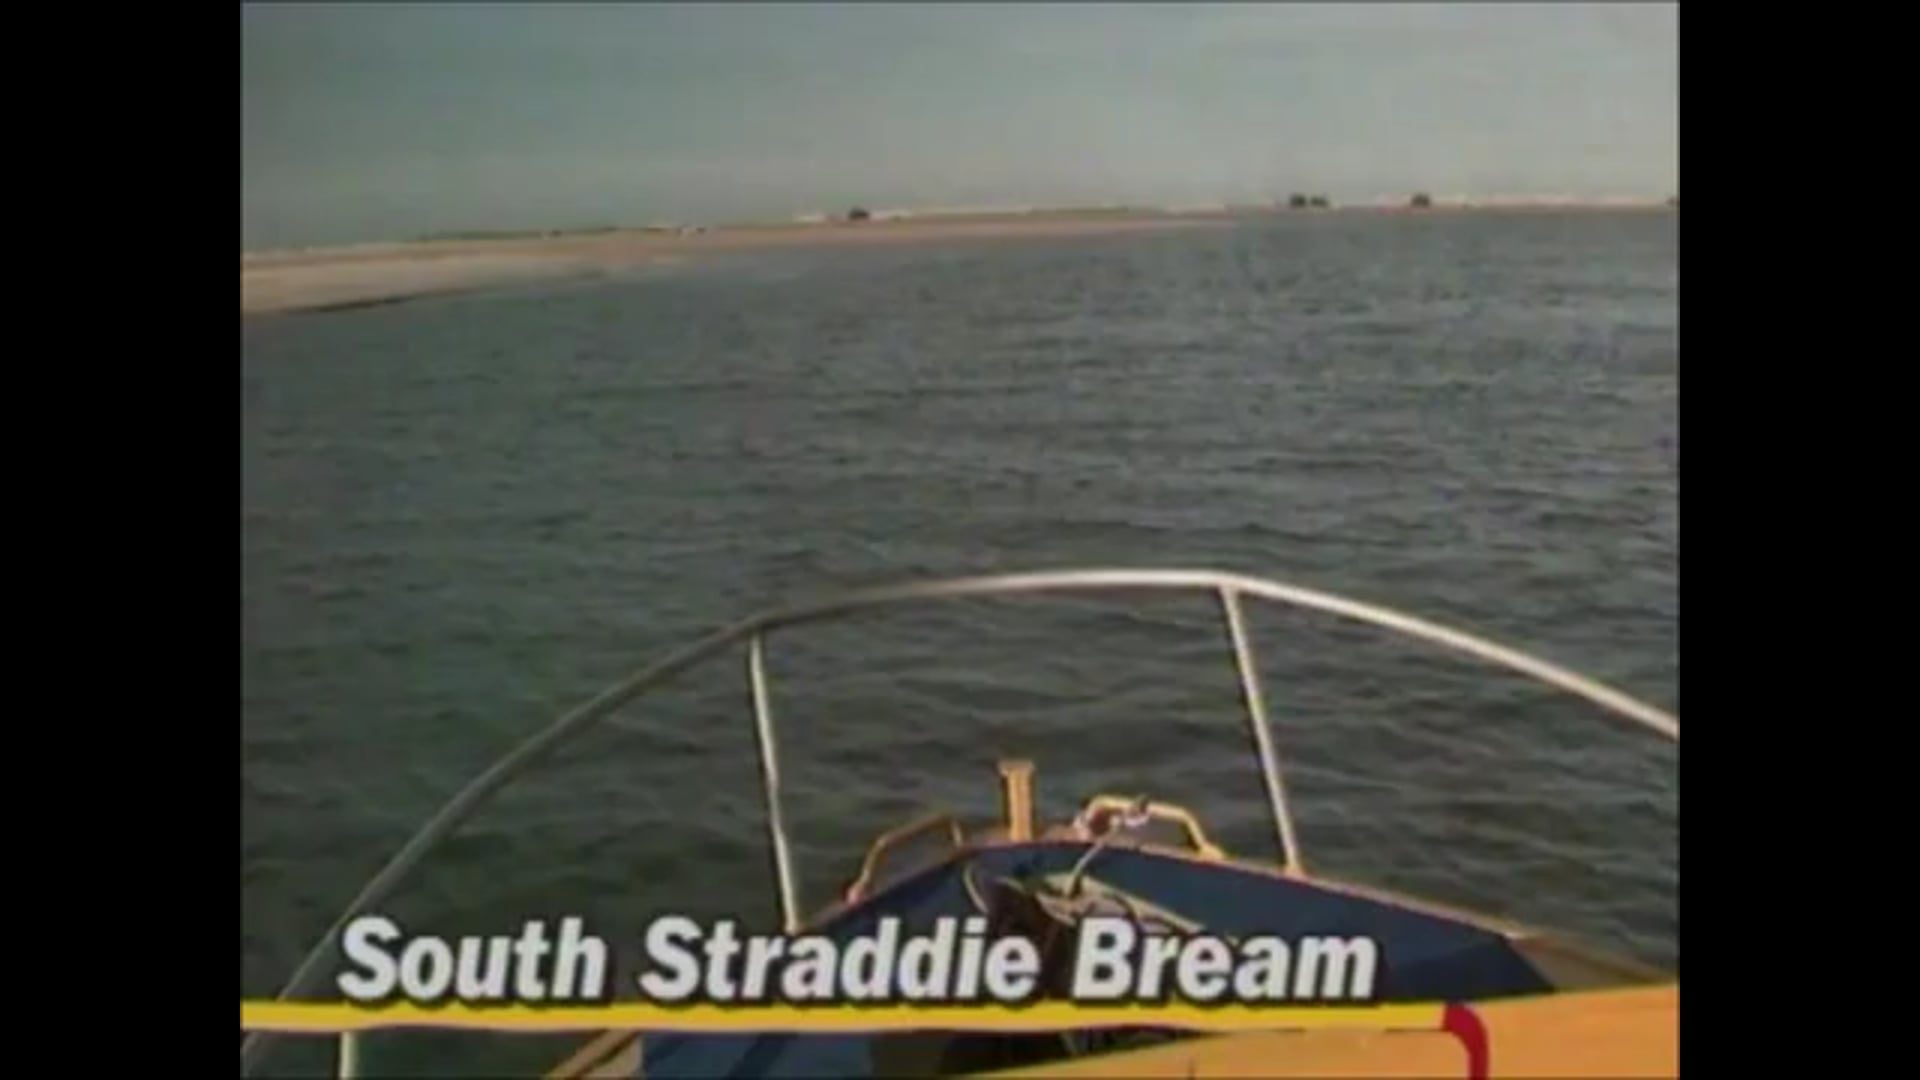 South Sraddie Bream